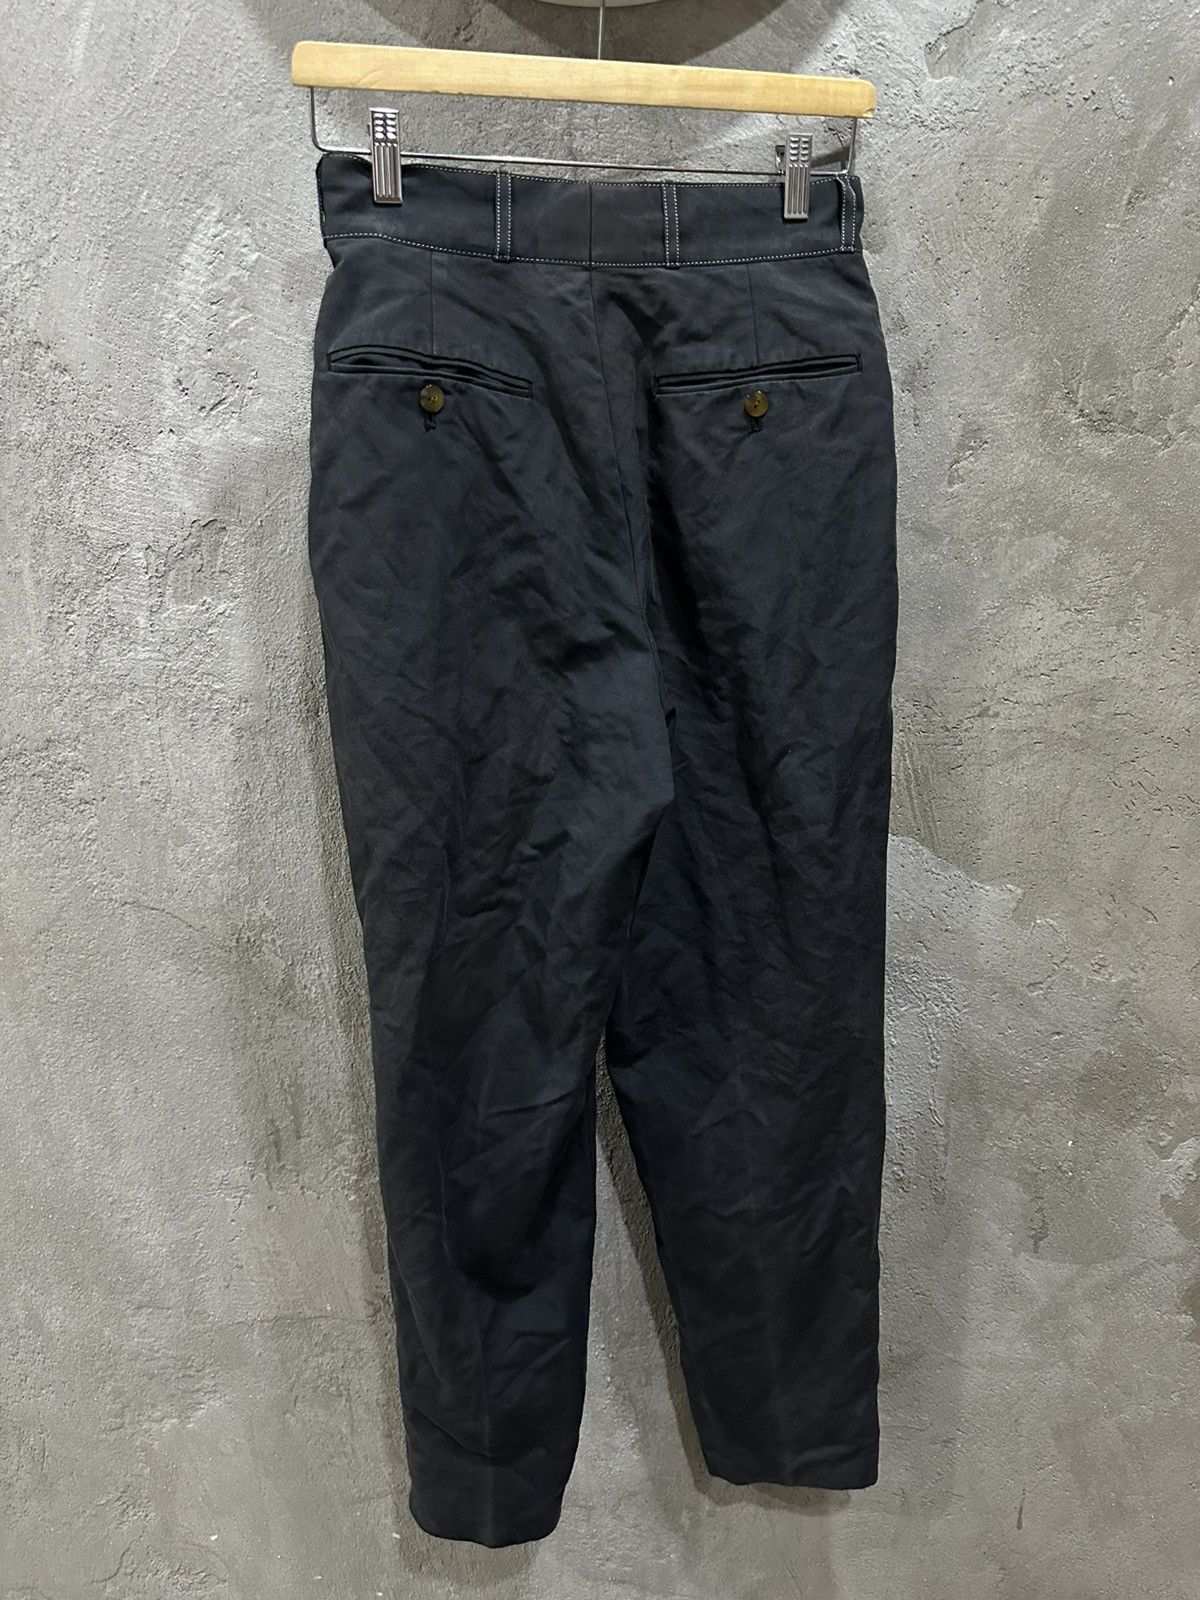 Jean Paul Gaultier Trousers Black Faded Pant - 13